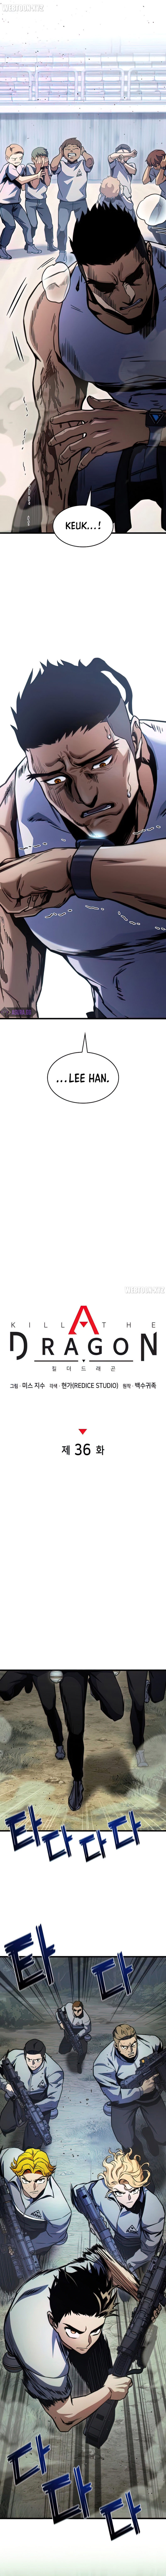 kill-the-dragon-chap-36-5